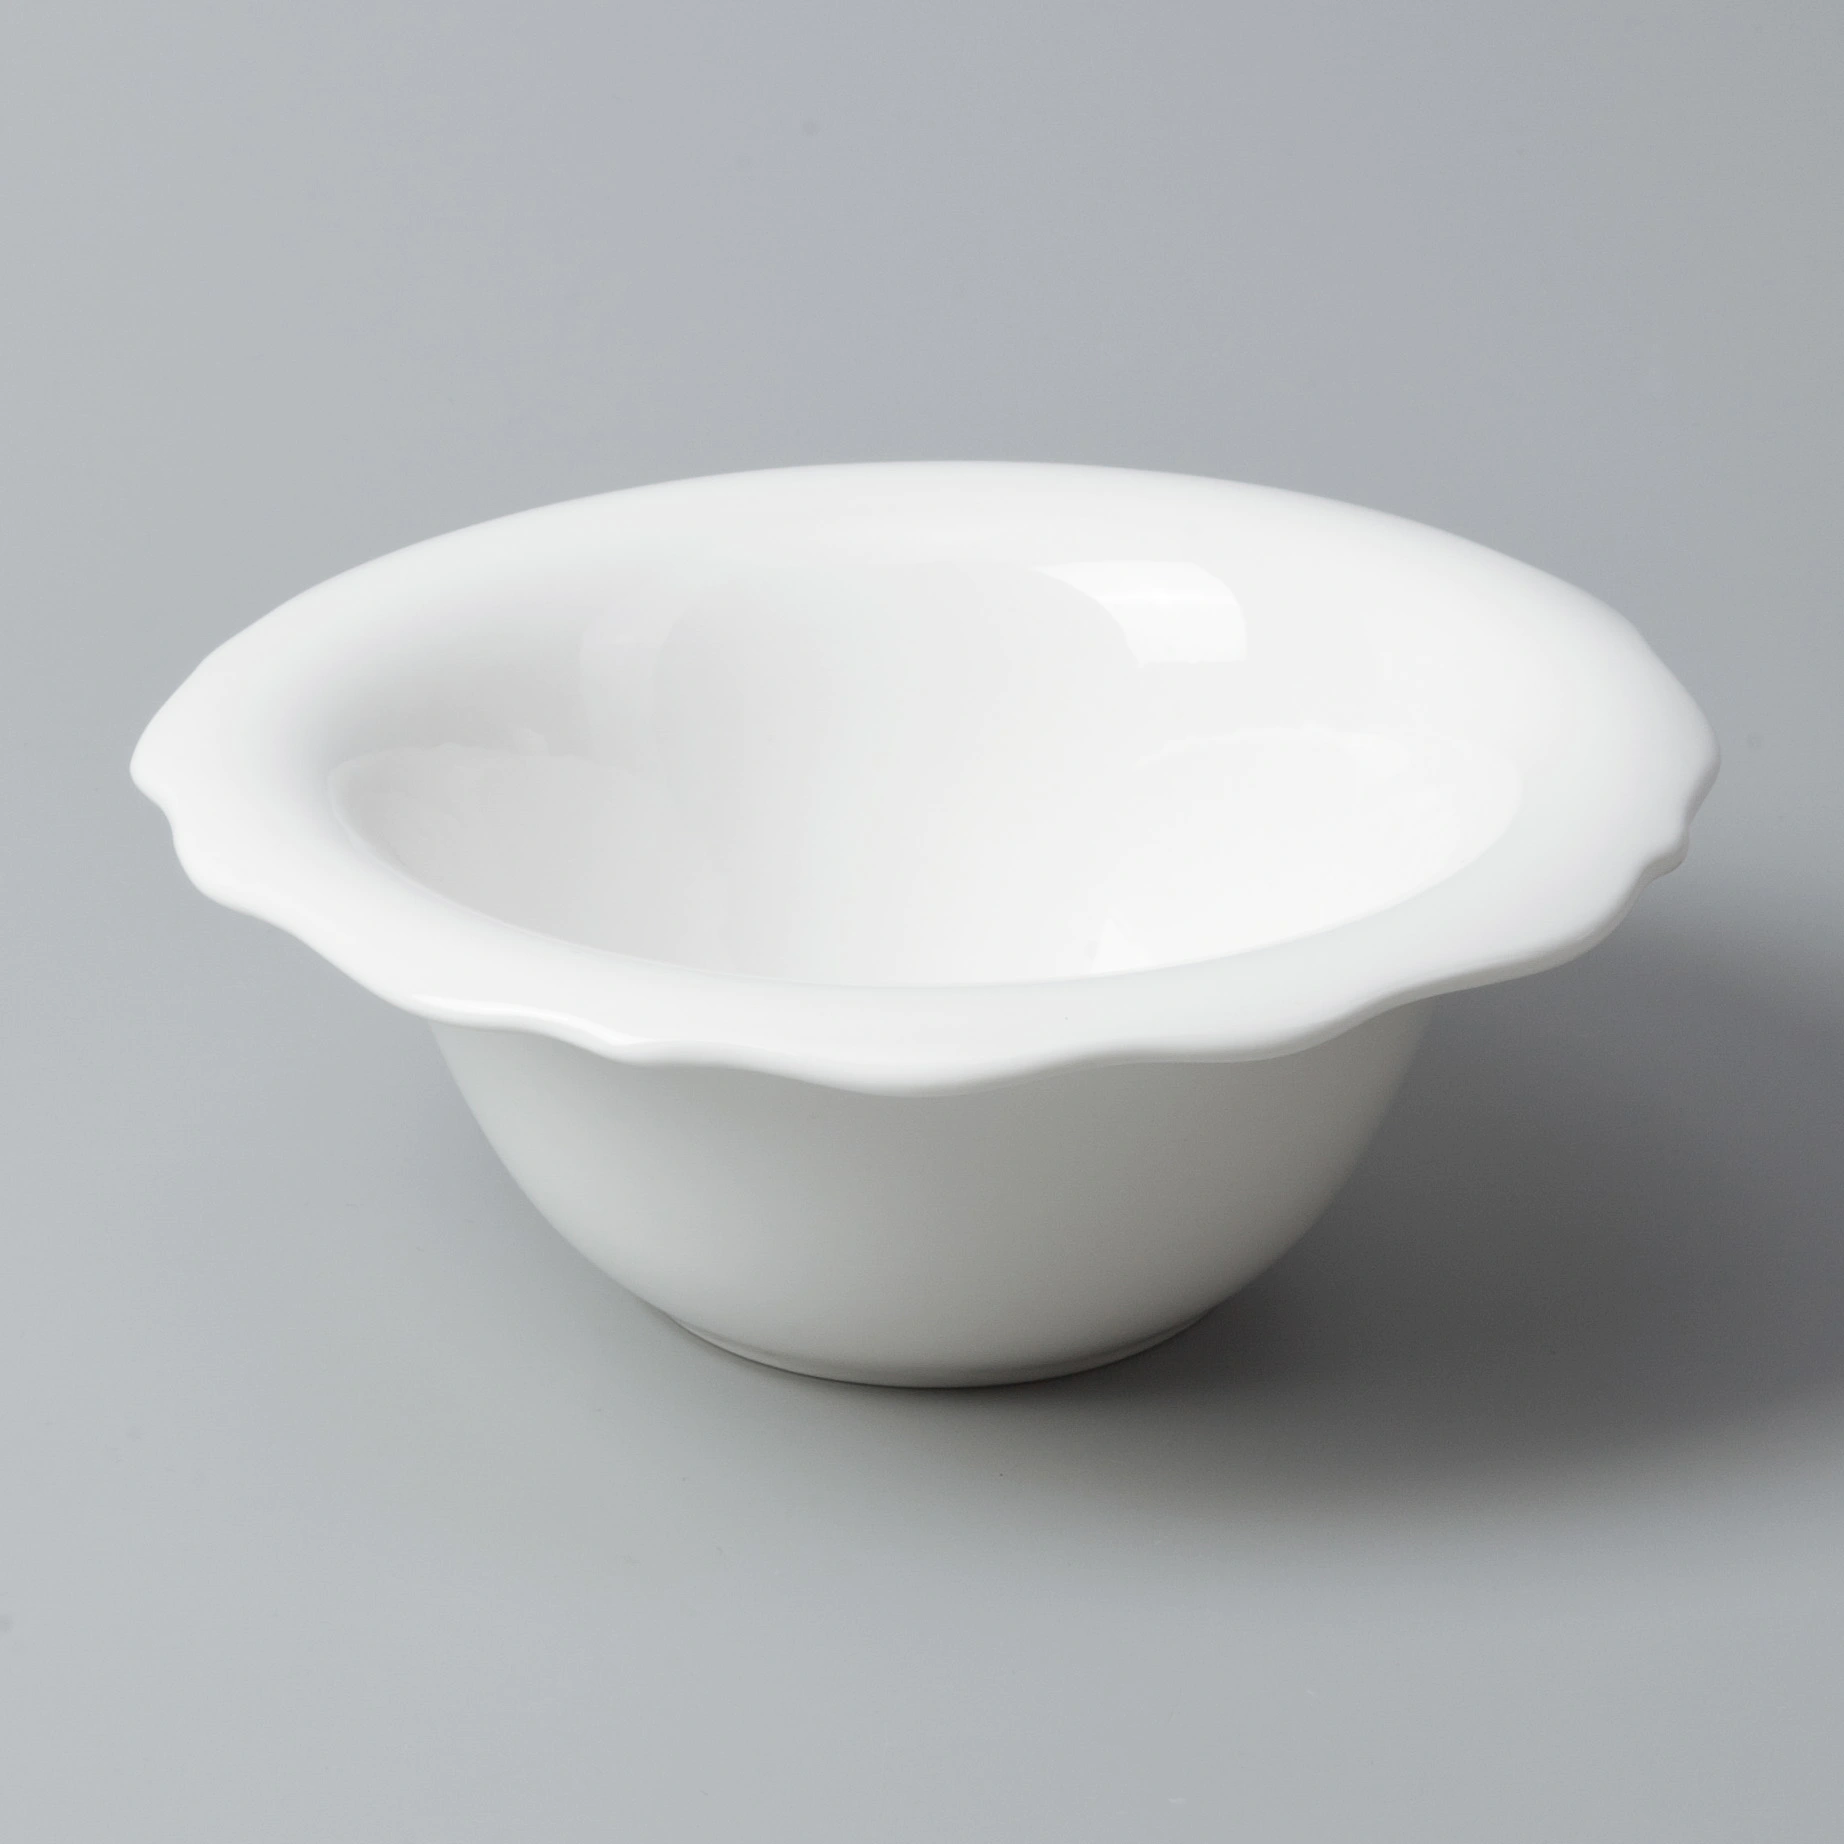 casual white porcelain dish set series for restaurant